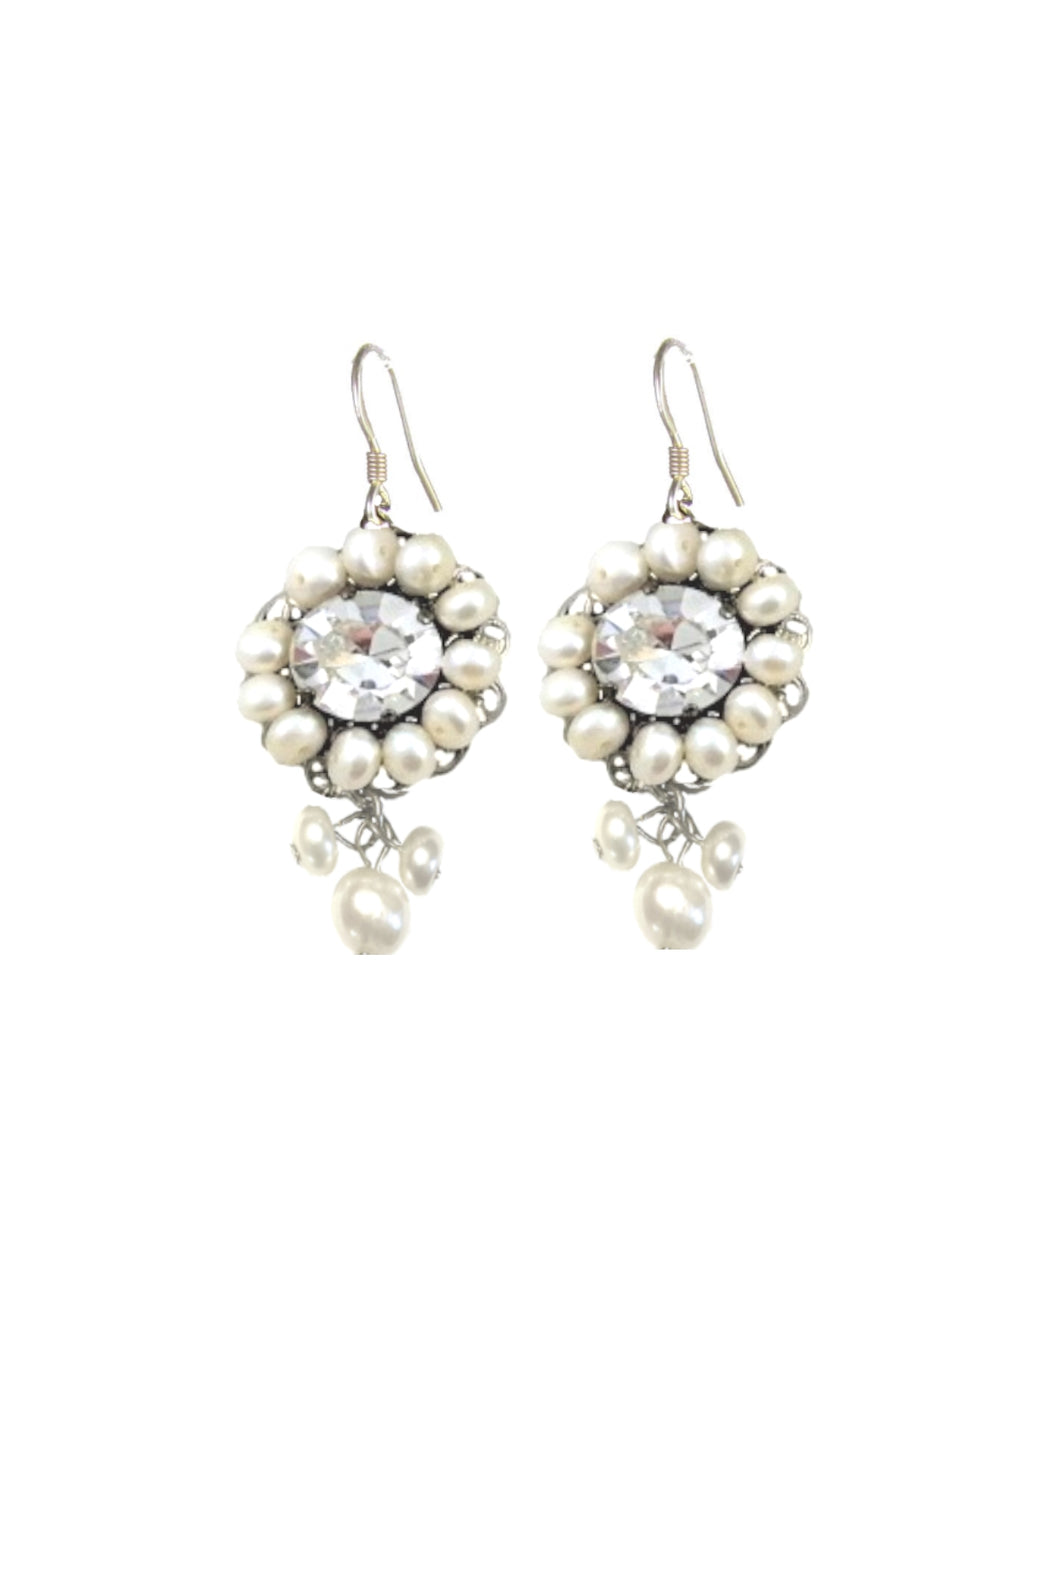 Lisa pearl and Swarovski crystals earrings